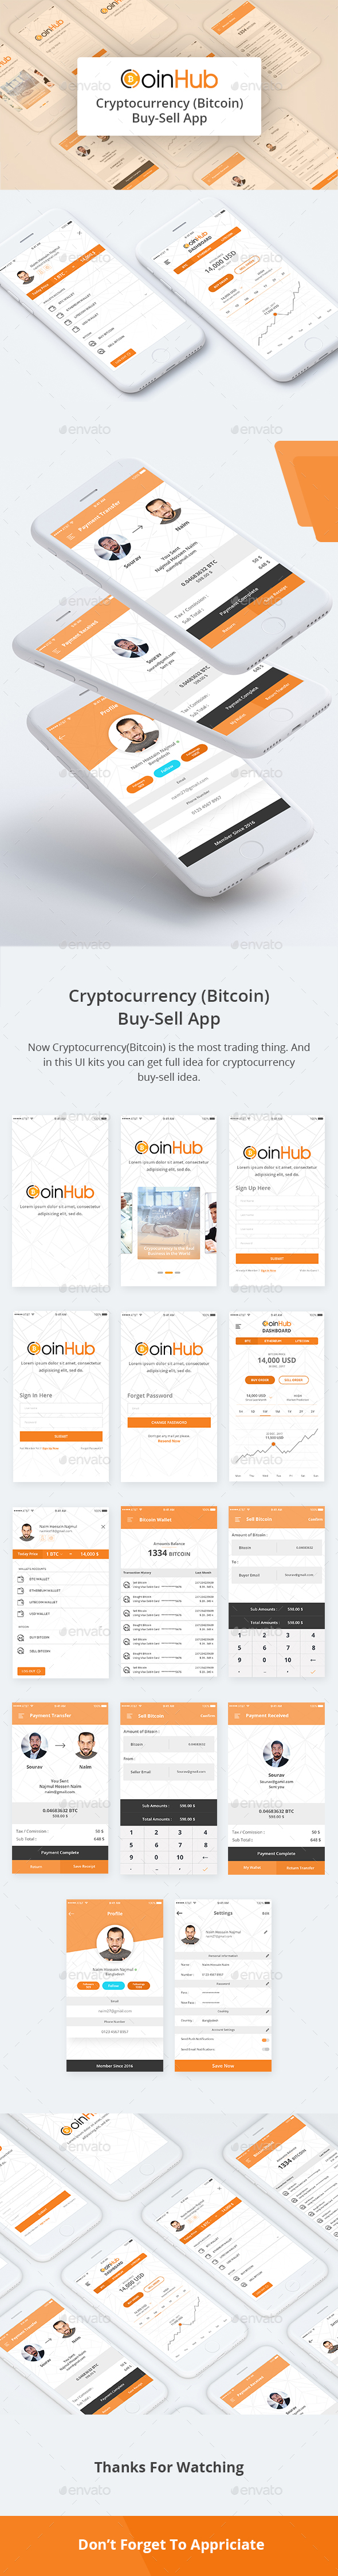 CoinHub - Cryptocurrency (Bitcoin) Buy-Sell App UI Kits